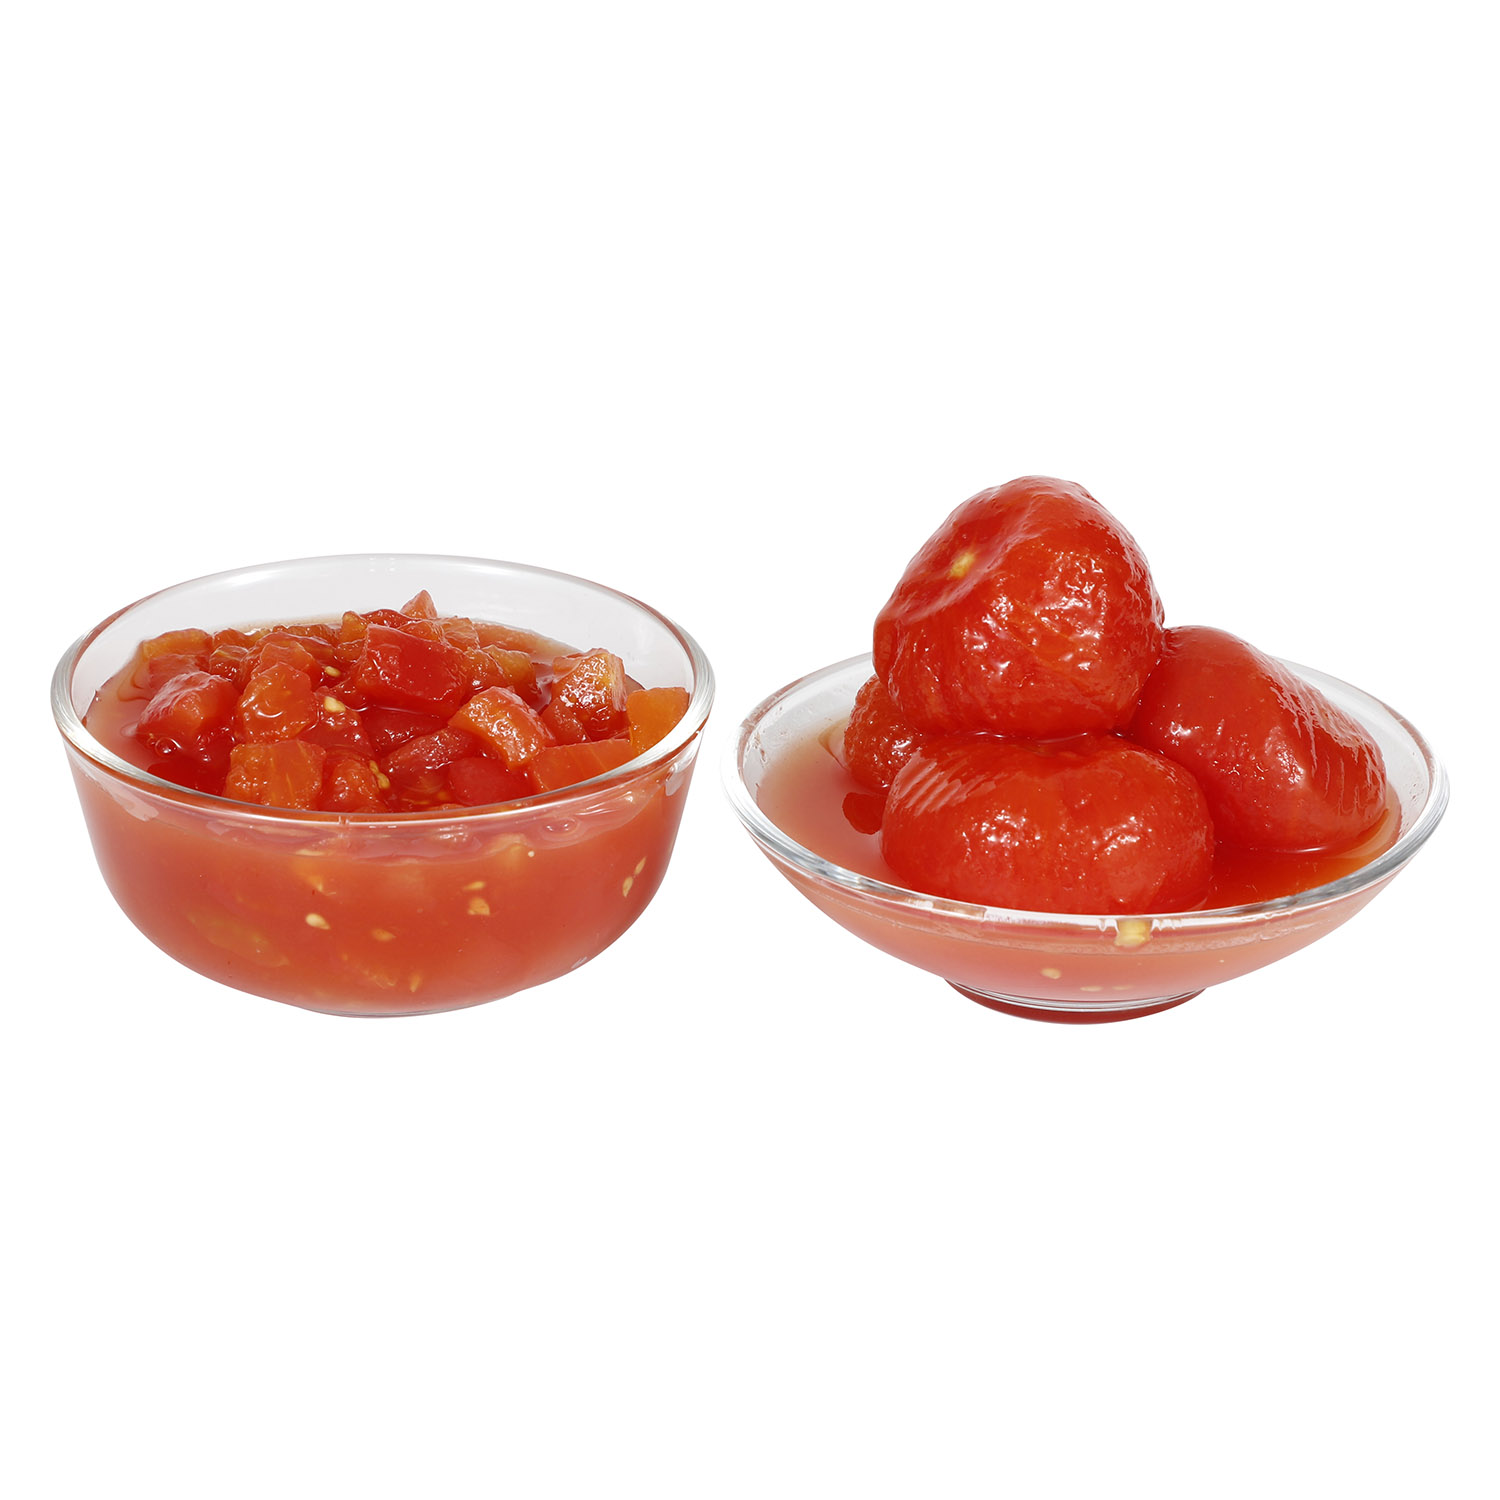 Tomate pelado entero&tomate en cubos